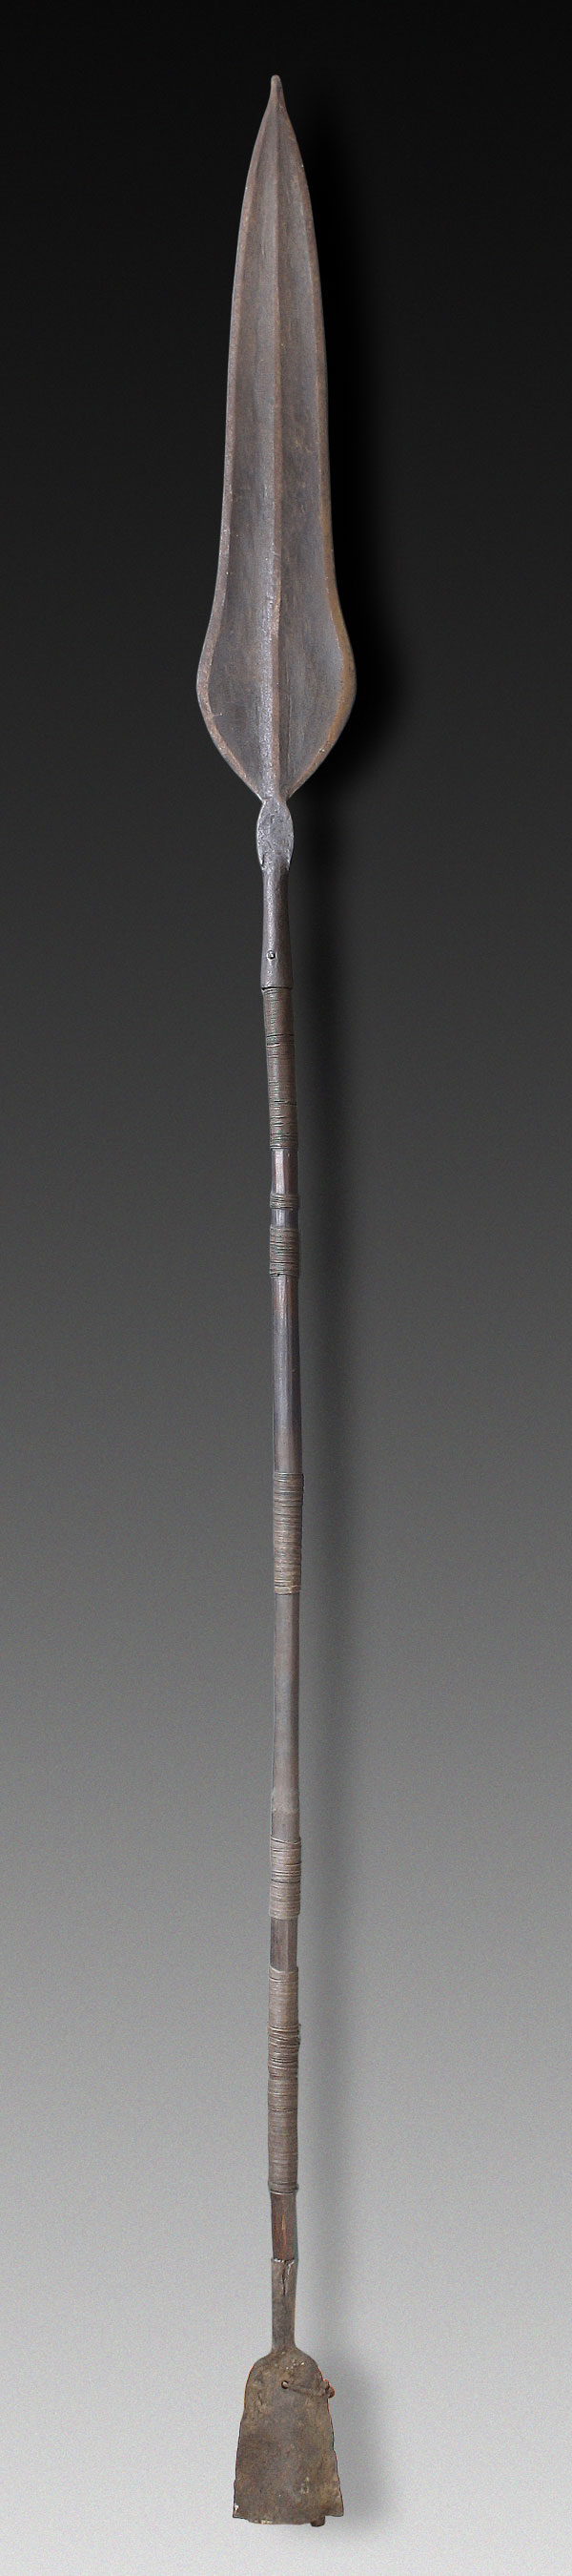 Bakuba Spear with bell Kongo Congo African Art A